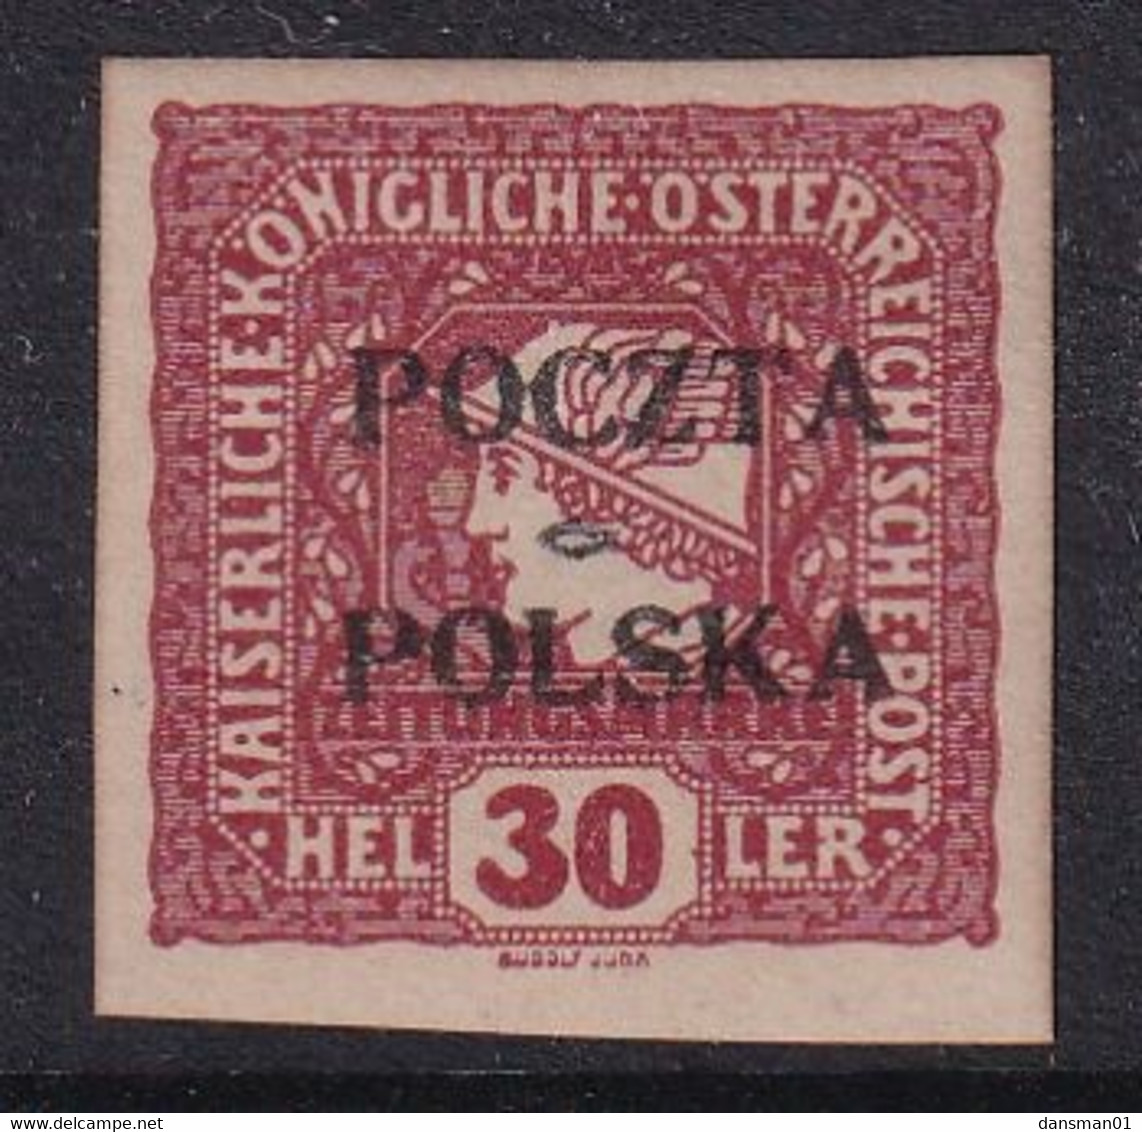 POLAND 1919 Krakow Fi 54 Mint Hinged Forgery - Neufs